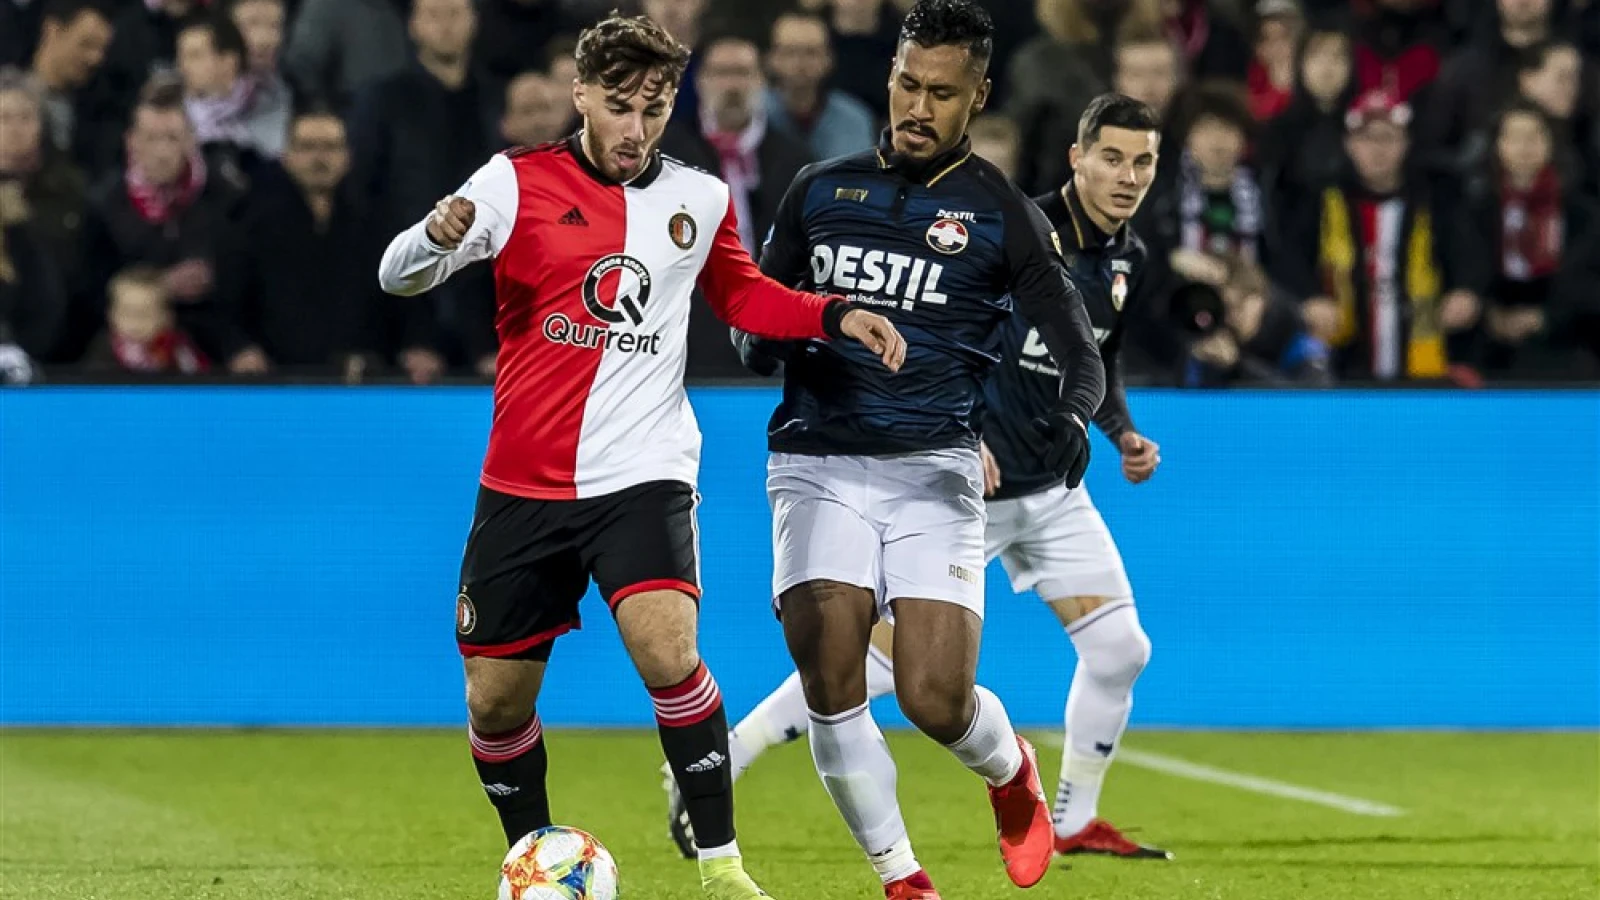 LIVE | Feyenoord - Willem II 2-3 | Einde wedstrijd